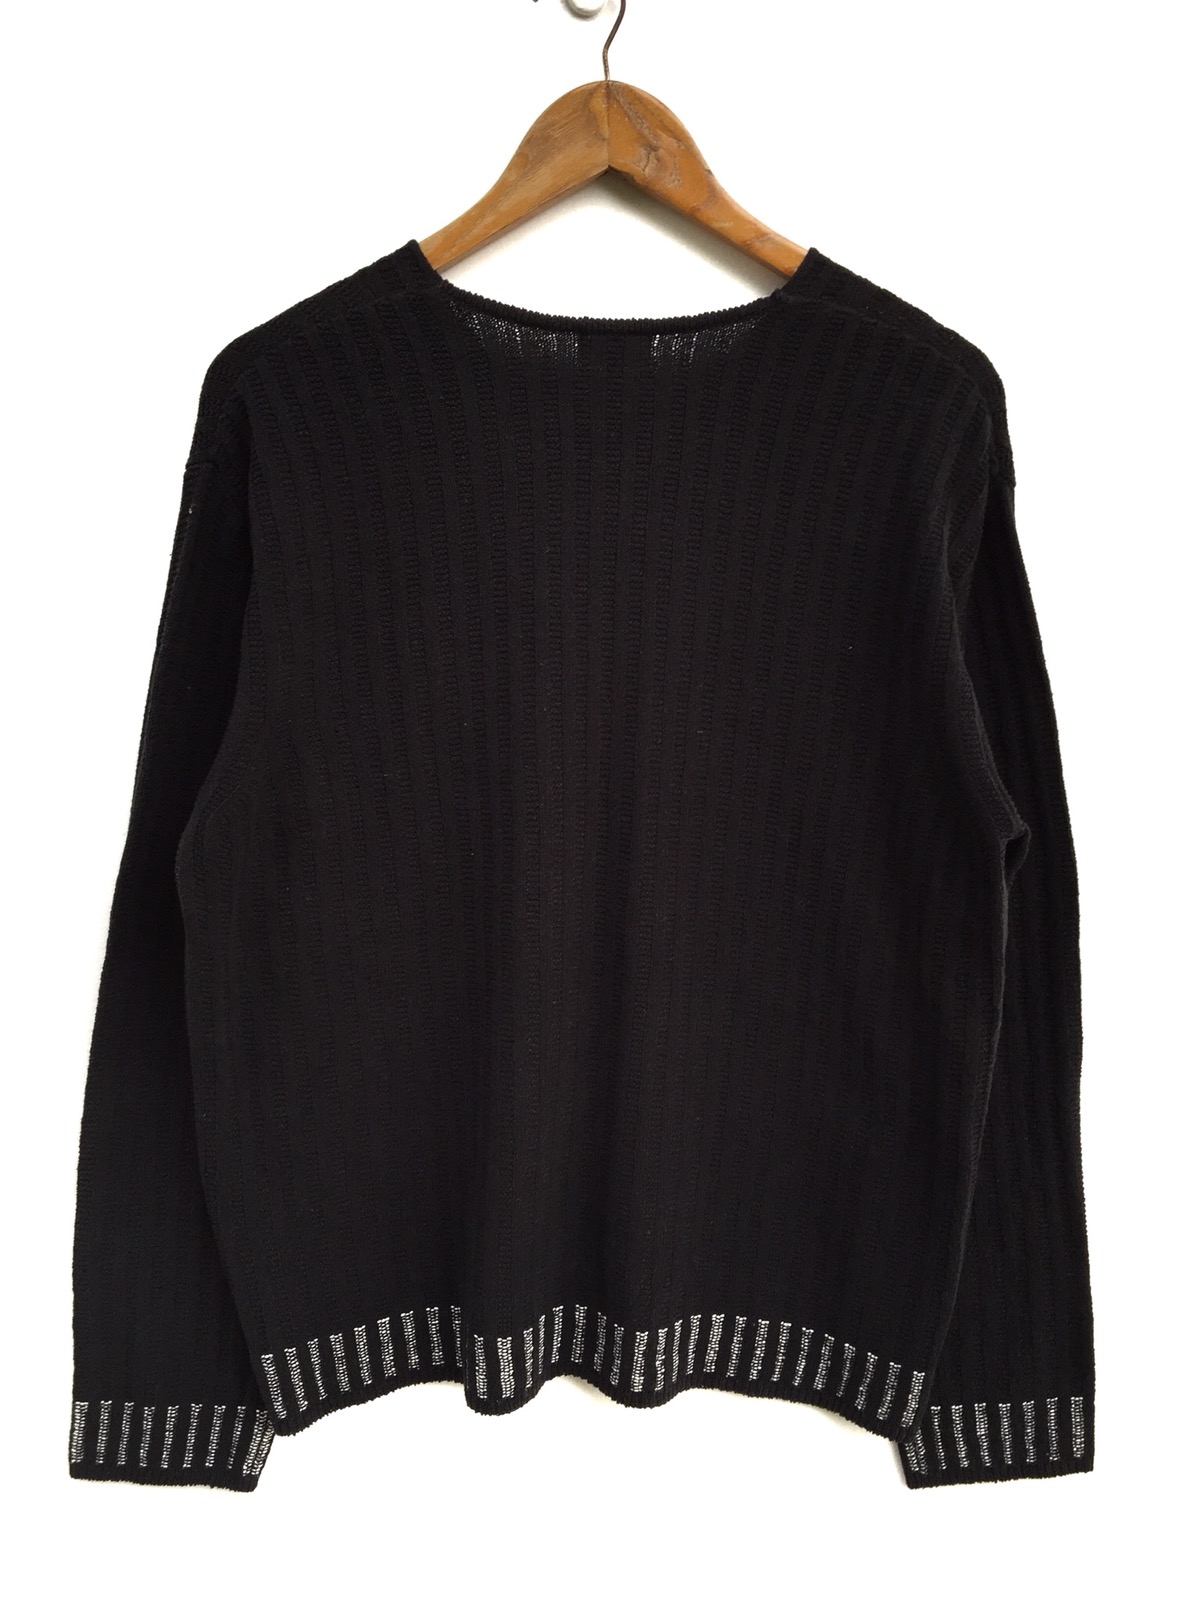 Vintage Japanese Brand Kenzo Hand Knit Black Sweatshirt - 2